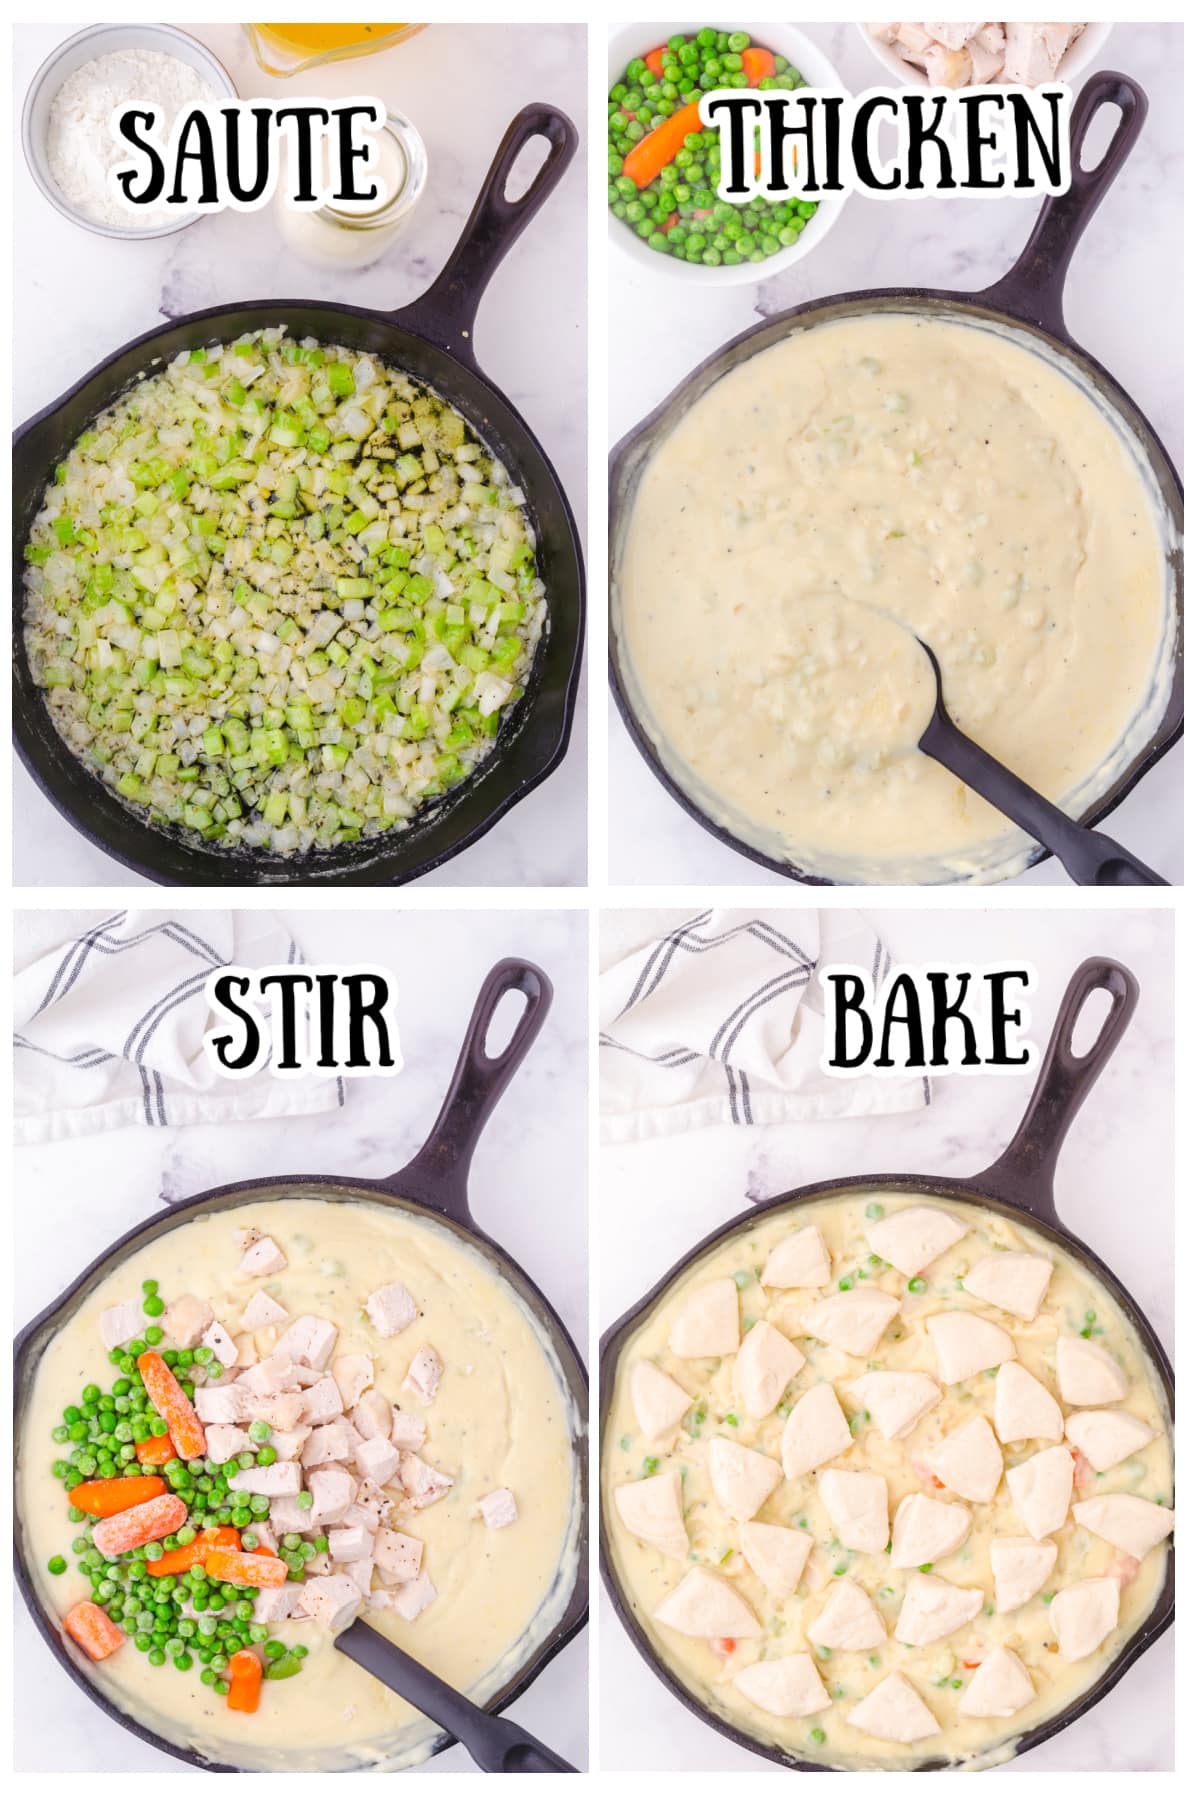 Steps for making chicken pot pie.